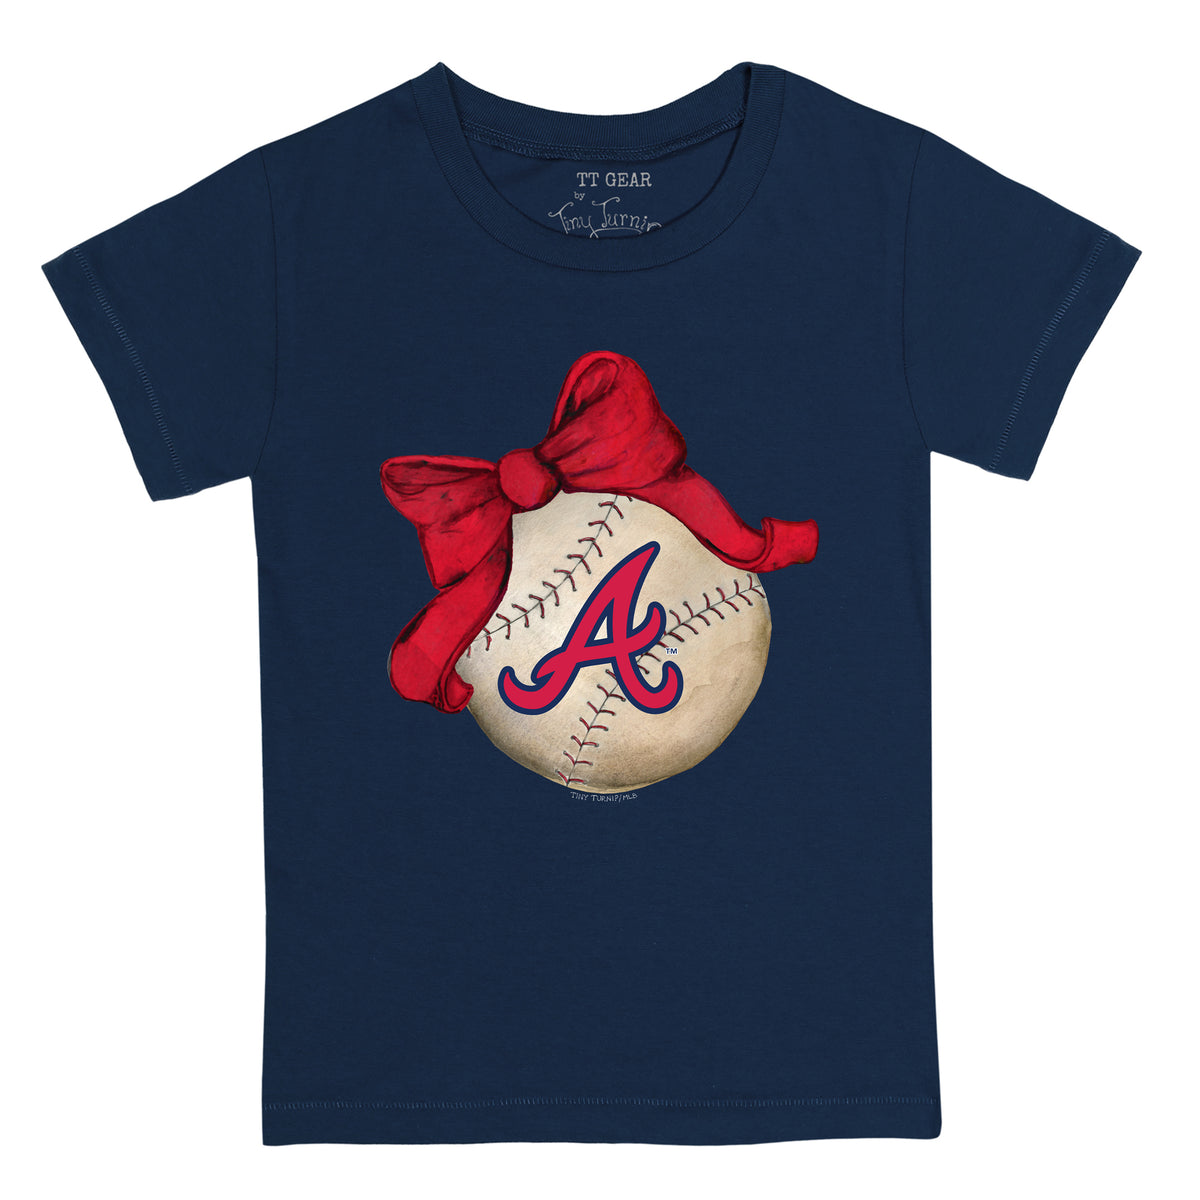 Atlanta Braves Tiny Turnip Youth Baseball Flag T-Shirt - White